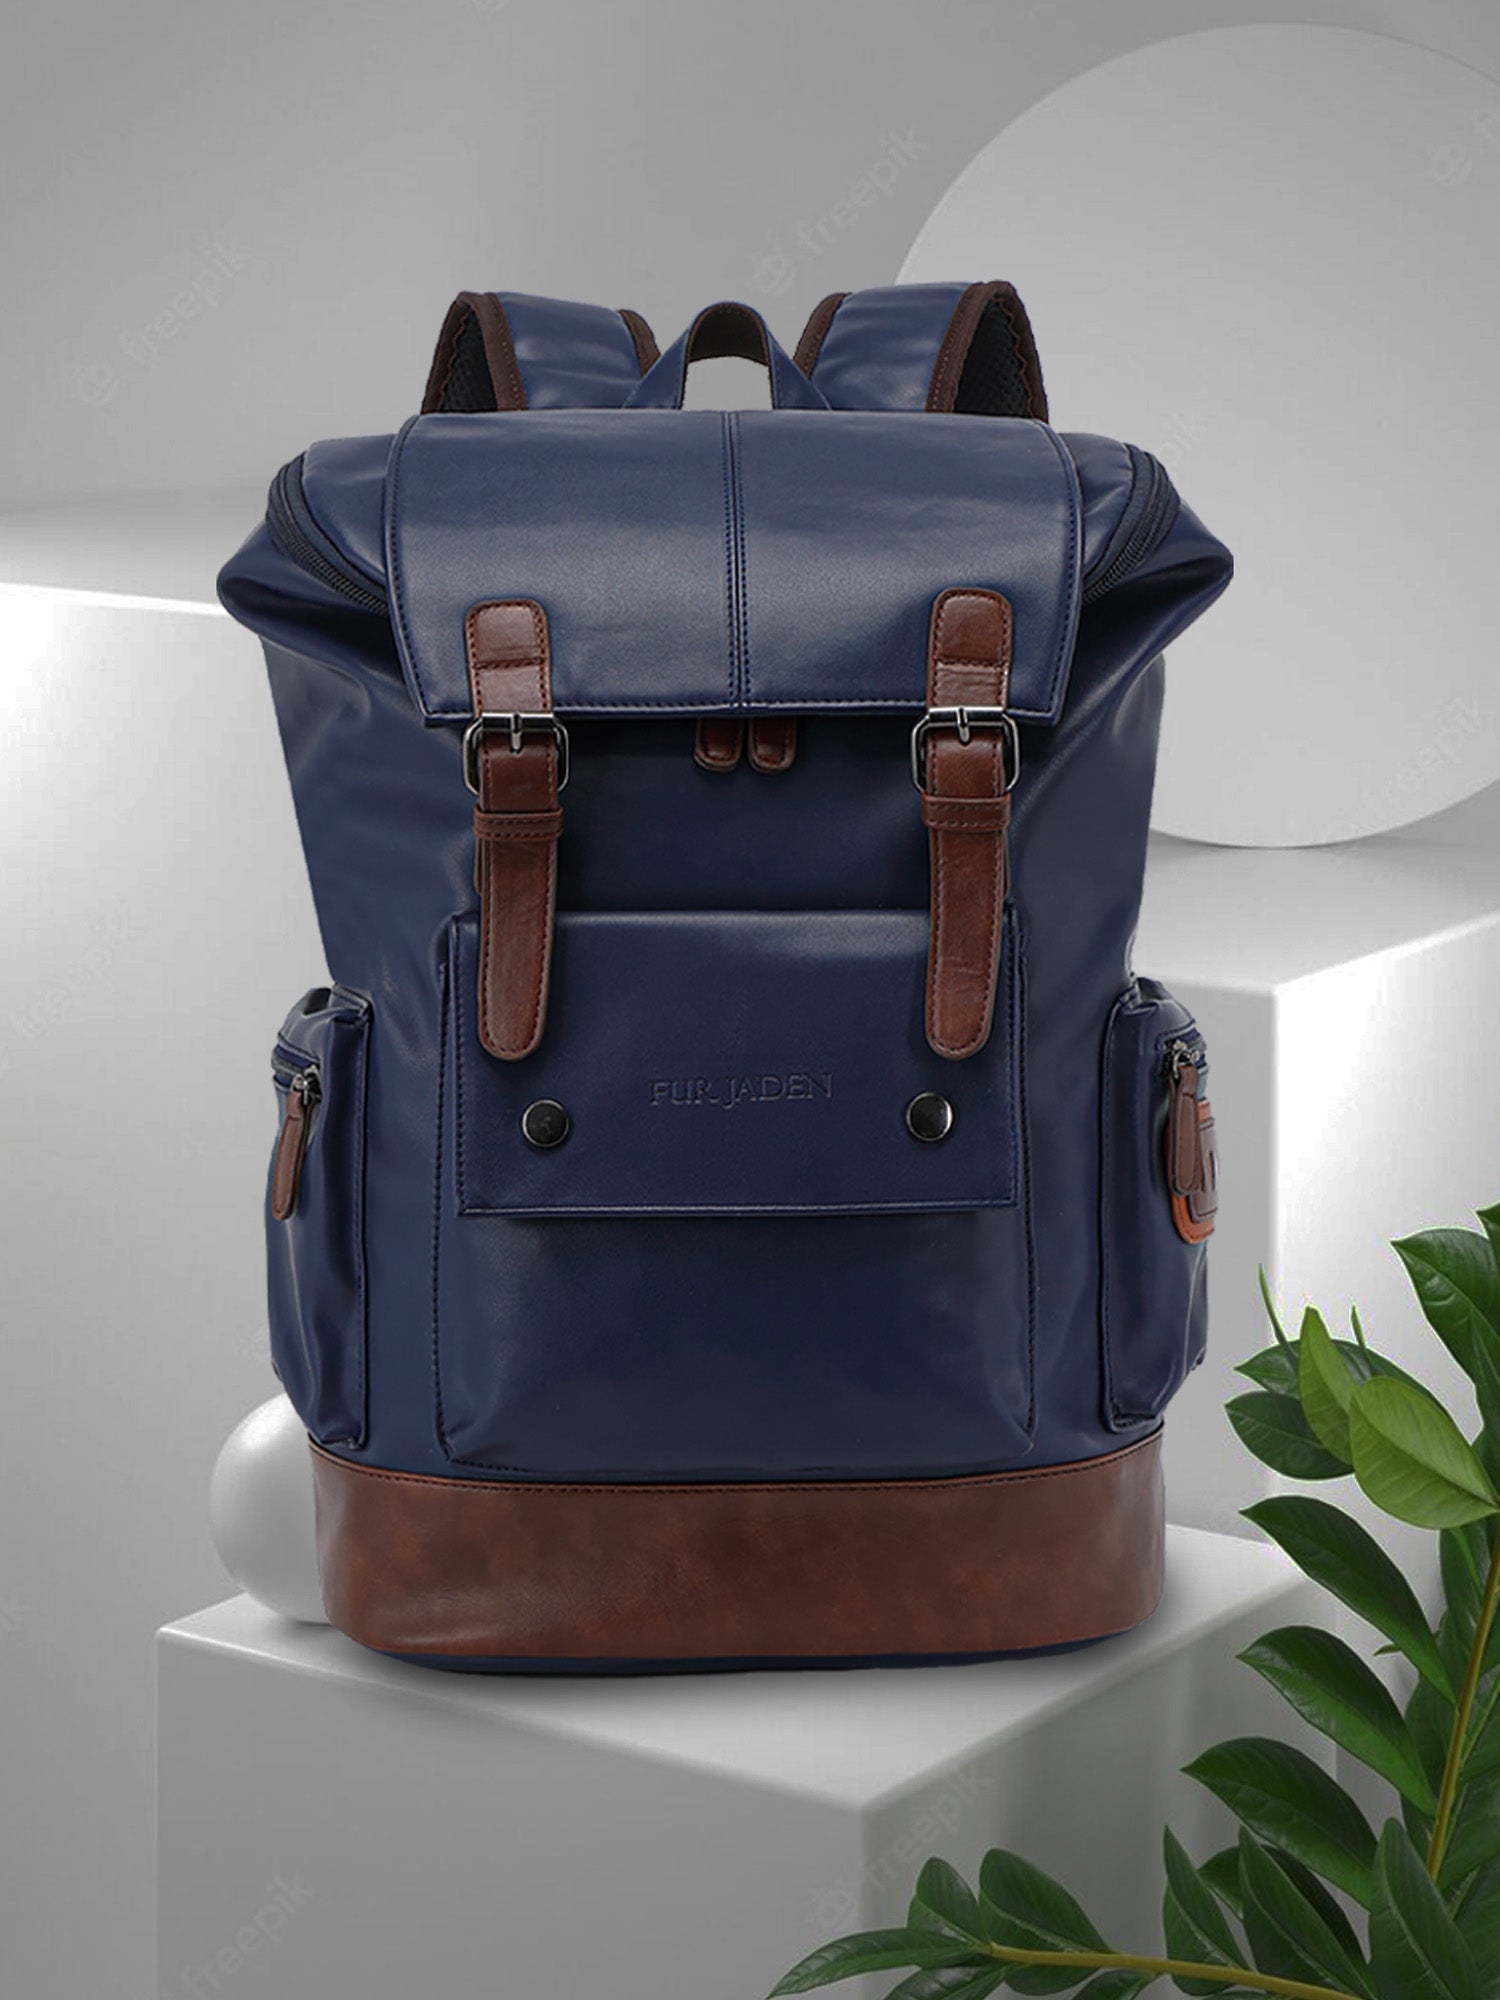 Anti Laptop Theft Jaden Fur Lifestyle Ltd Blue Pvt Jaden Fur 15.6 – Leatherette Backpack Midnight Inch Navy